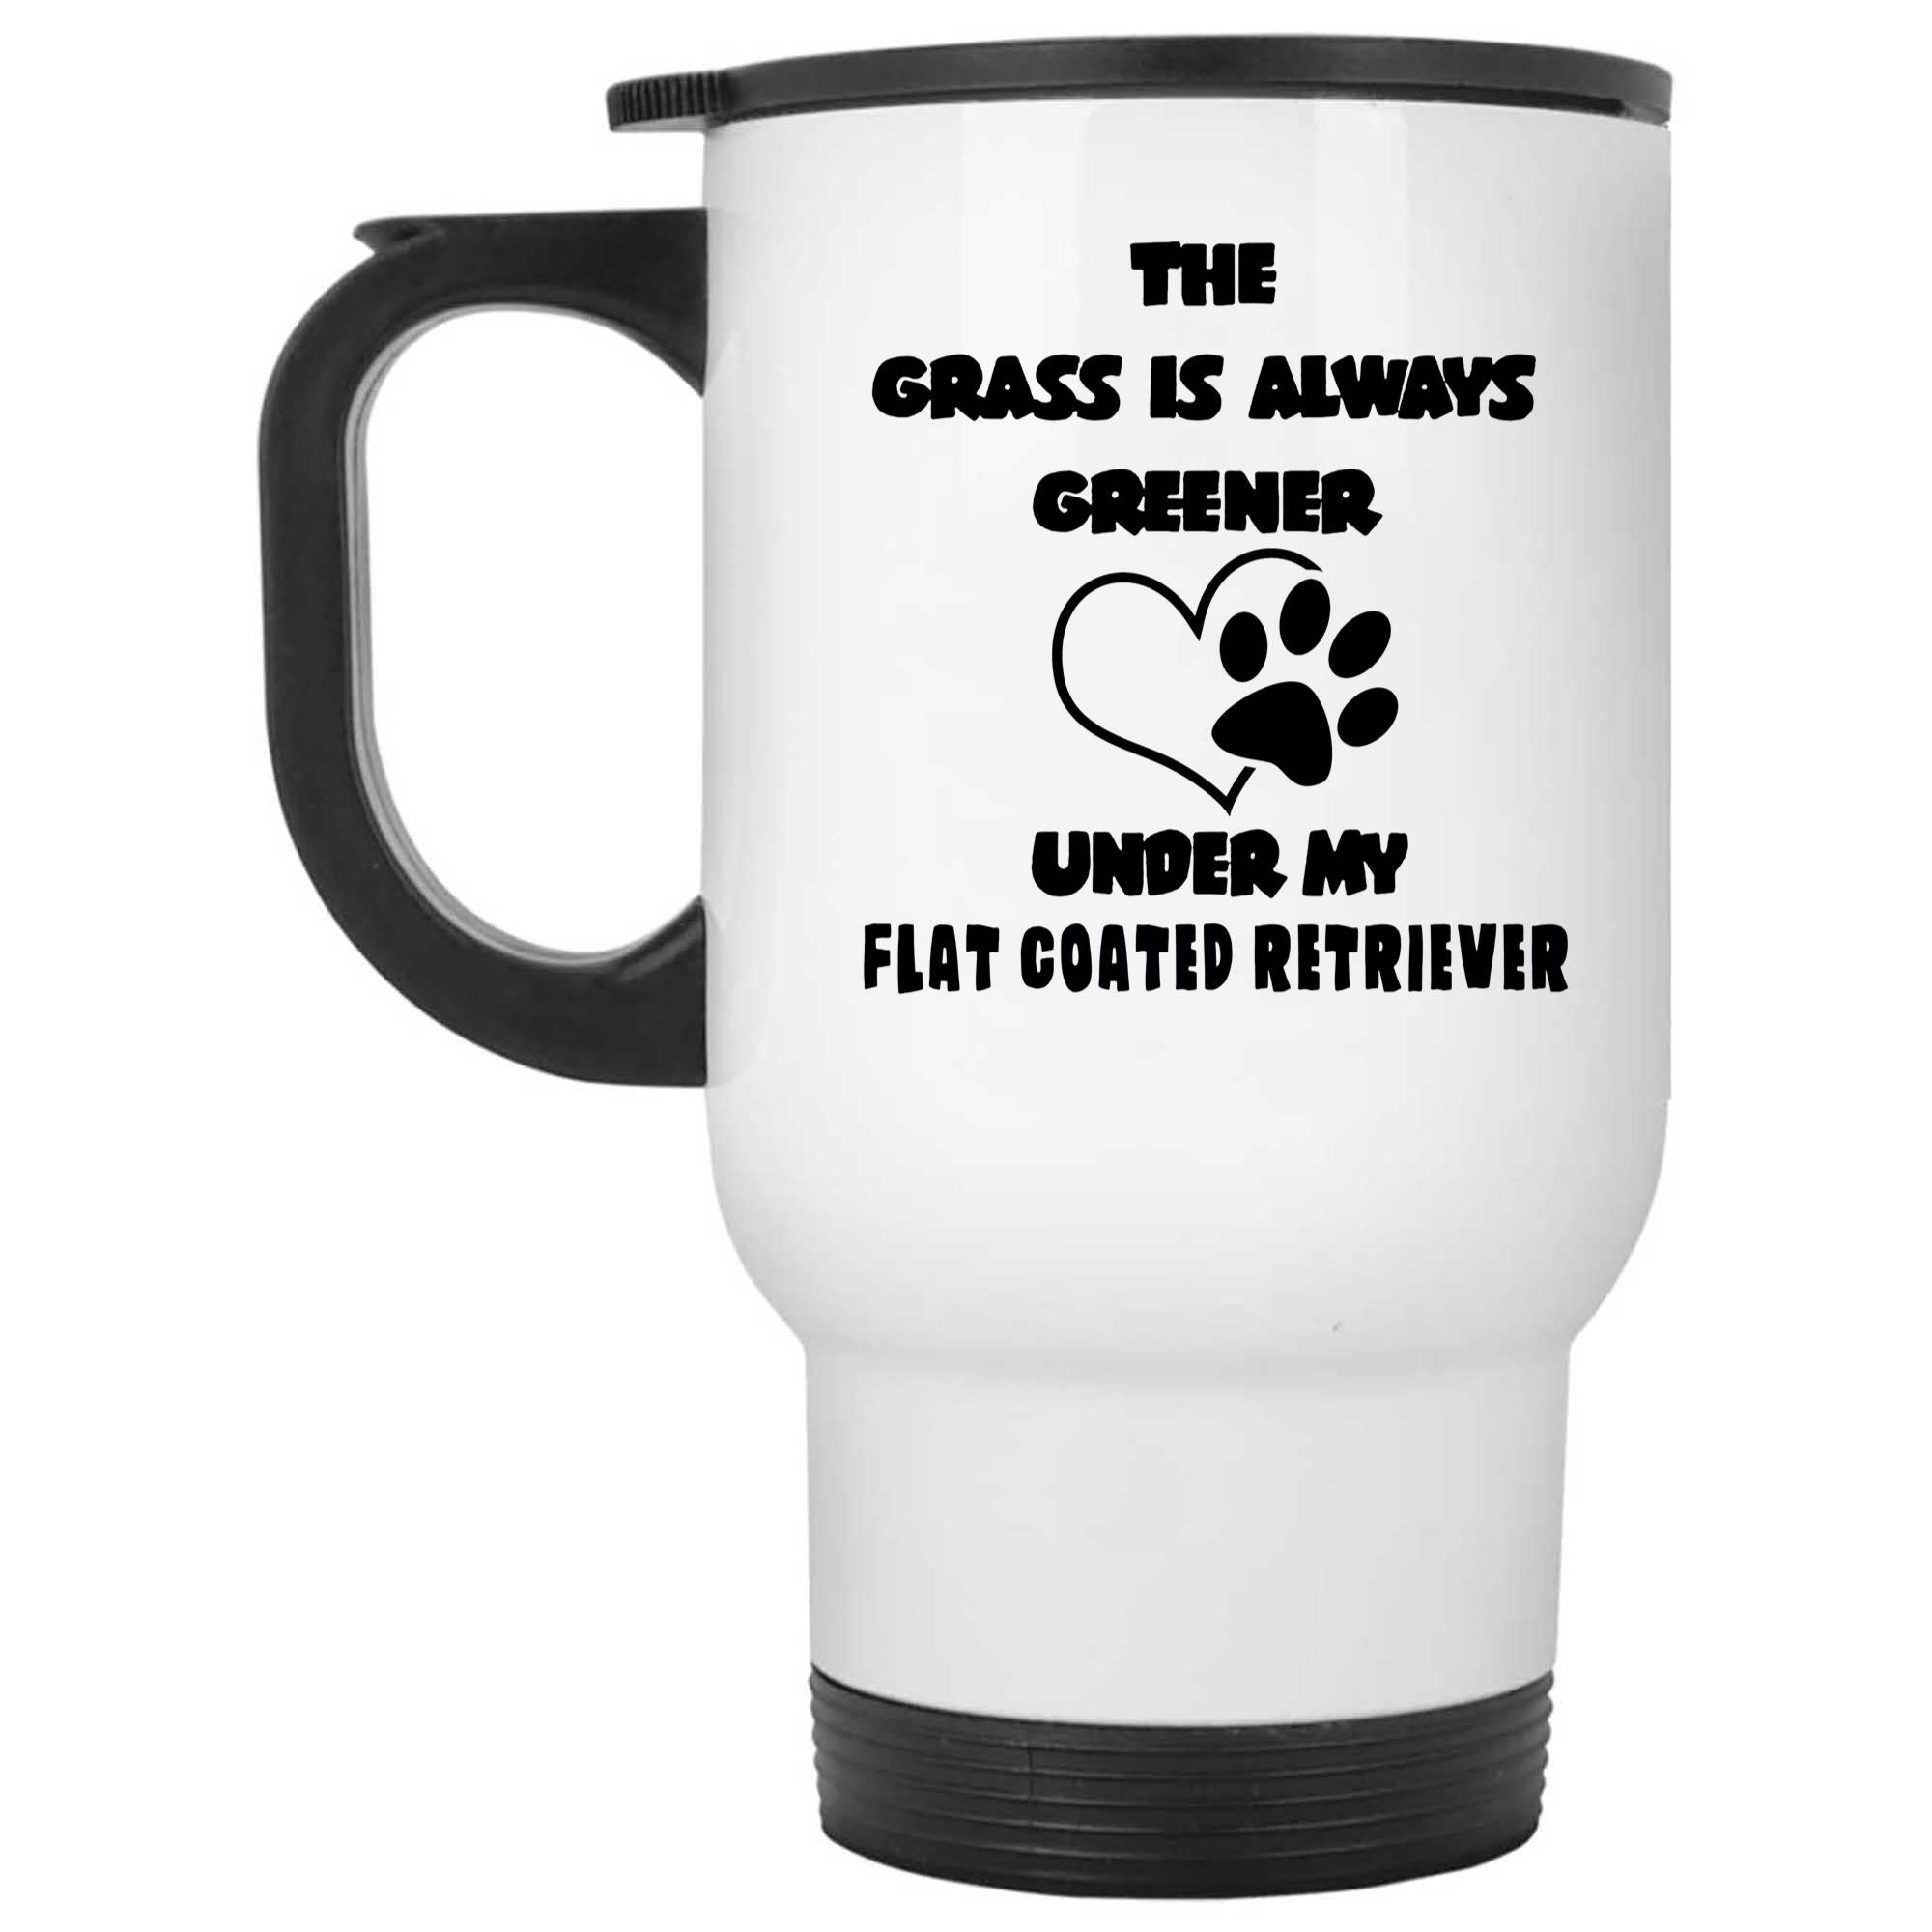 Skitons Funny Ceramic Novelty Coffee Mug The Grass Is Always Greener Under My Flat Coated Retriever Dog Funny Sarcastic, Dog Lover g8wpOnw